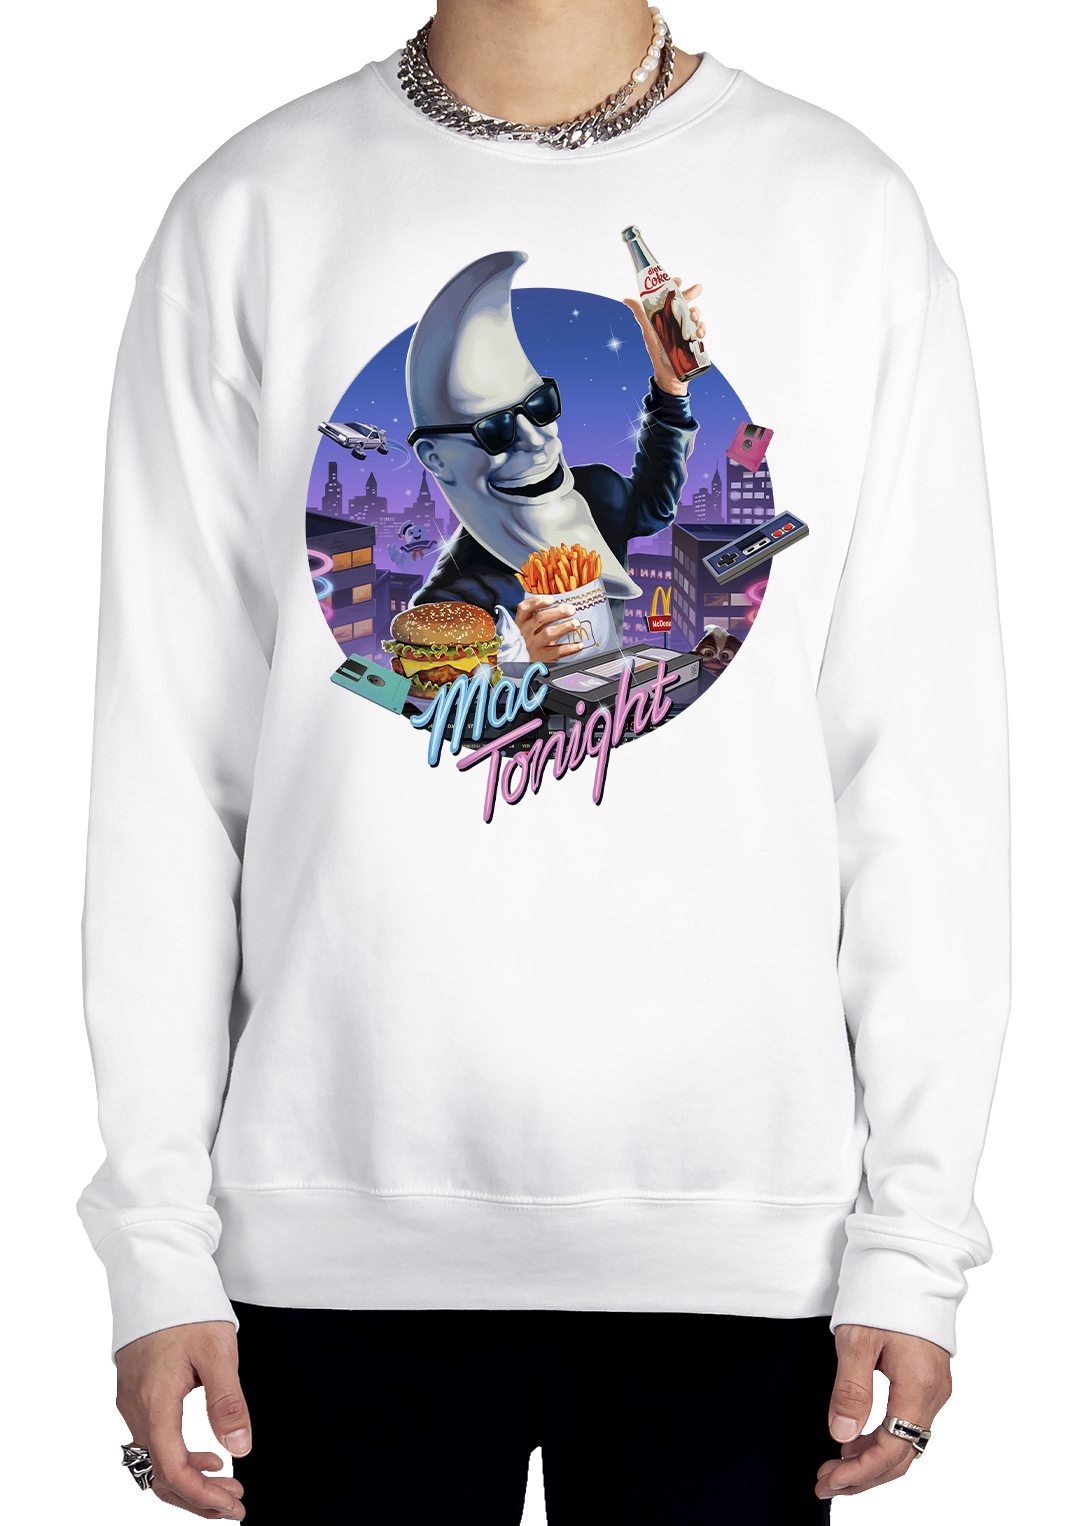 Mac Tonight Sweatshirt Graphic Sweatshirt Vapor95